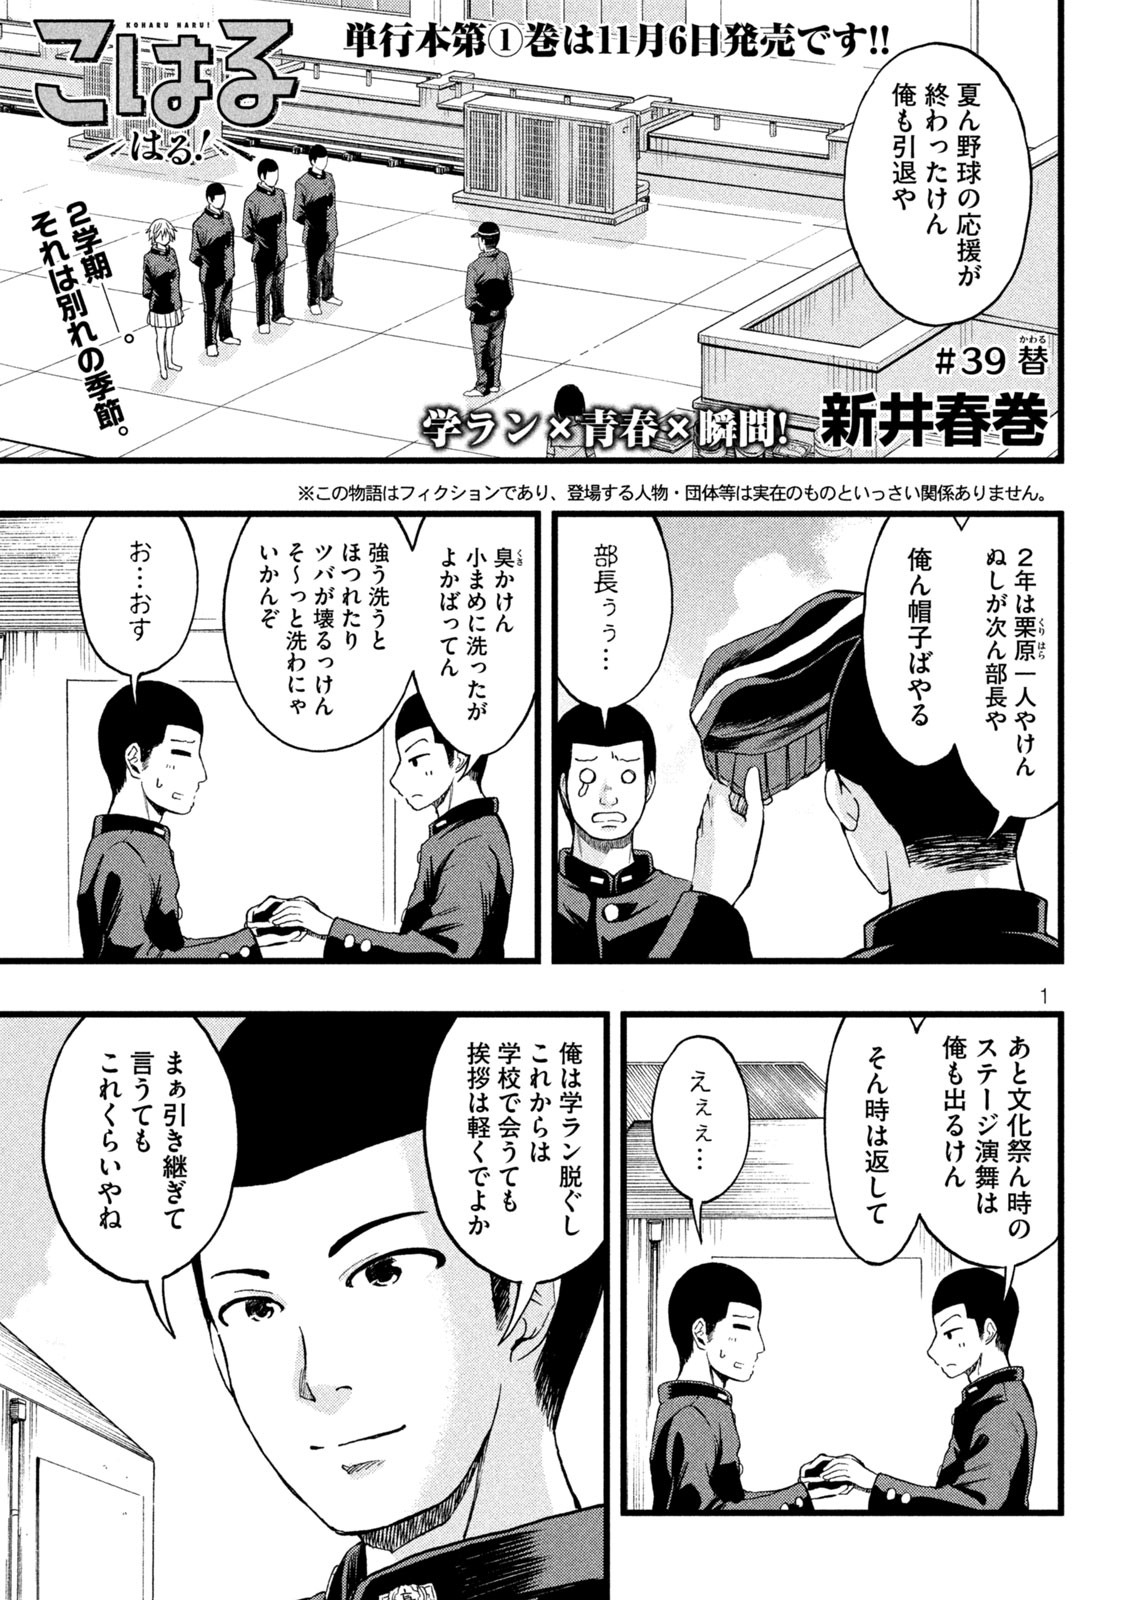 Koharu haru! - Chapter 39 - Page 1